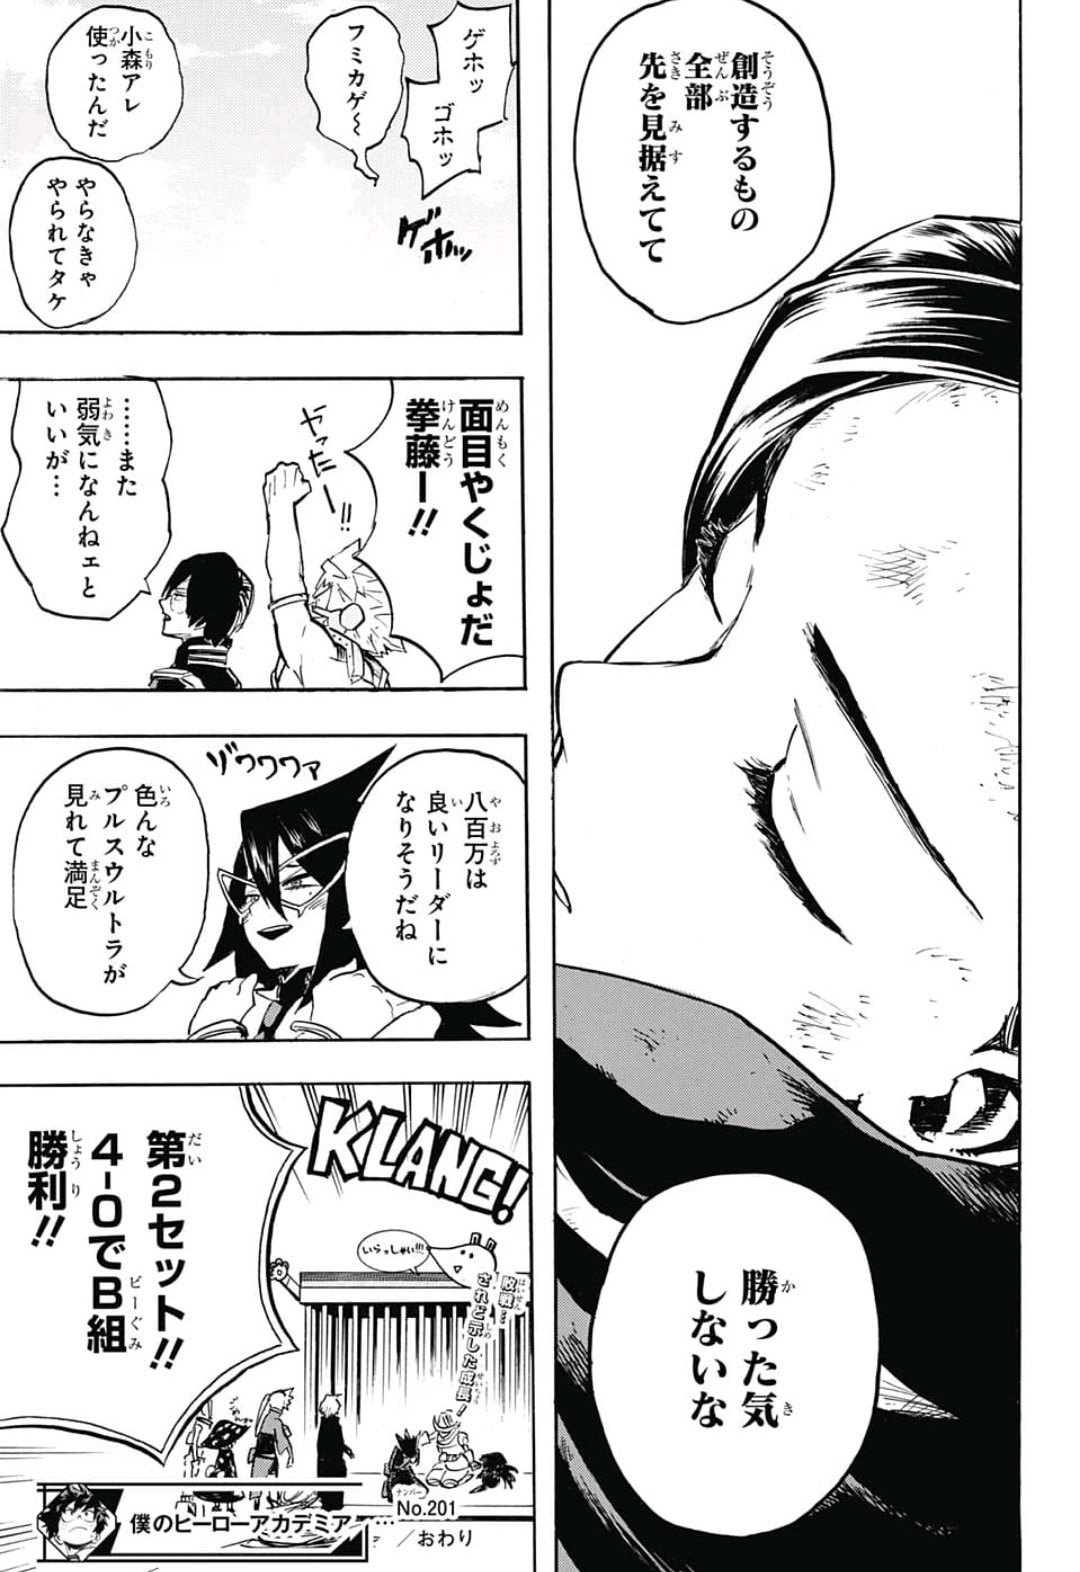 Boku no Hero Academia - Chapter 201 - Page 13